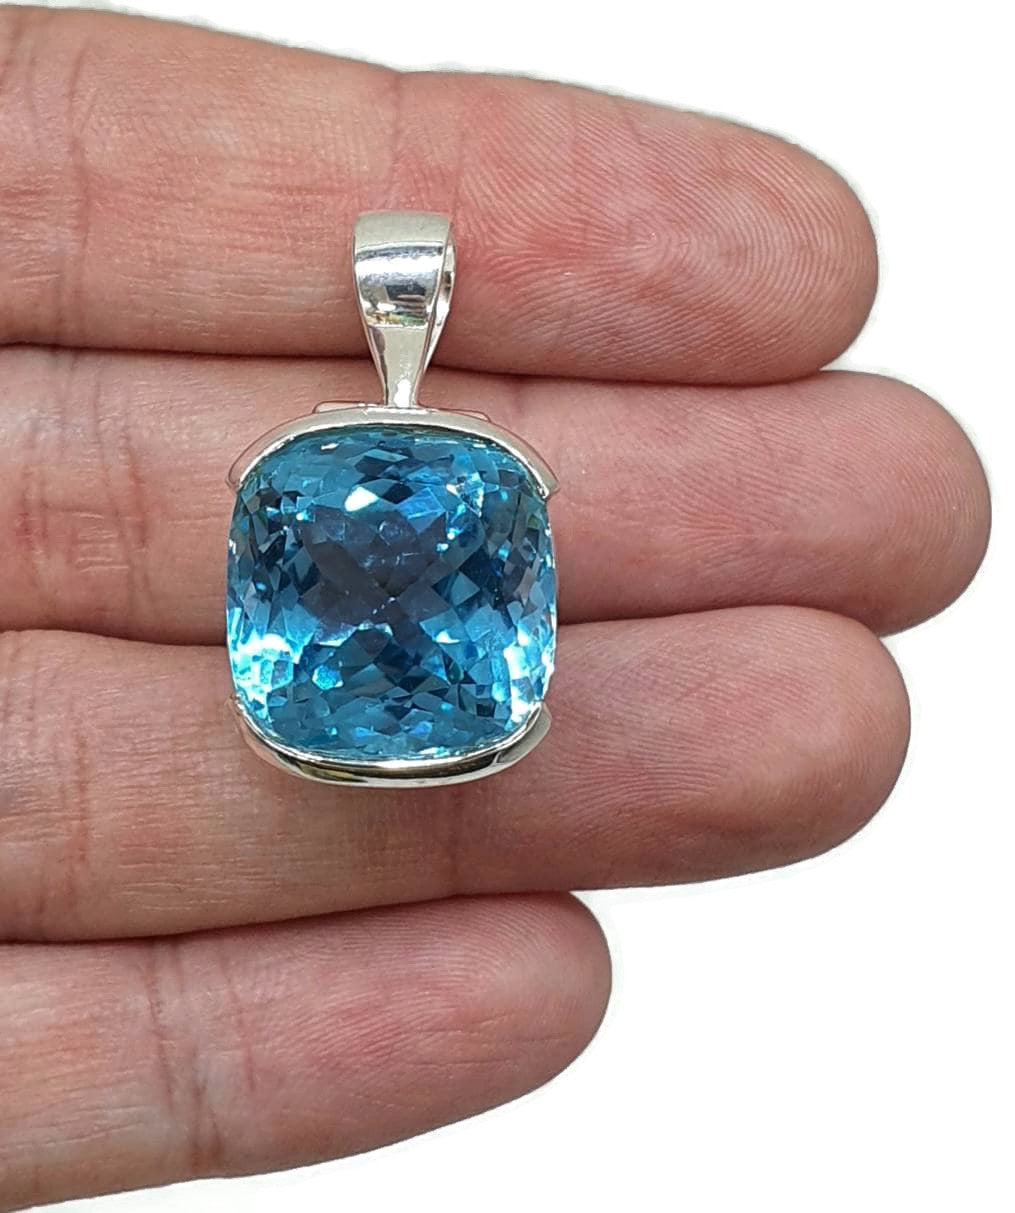 Swiss Blue Topaz Pendant, 37 carats, Sterling Silver - GemzAustralia 